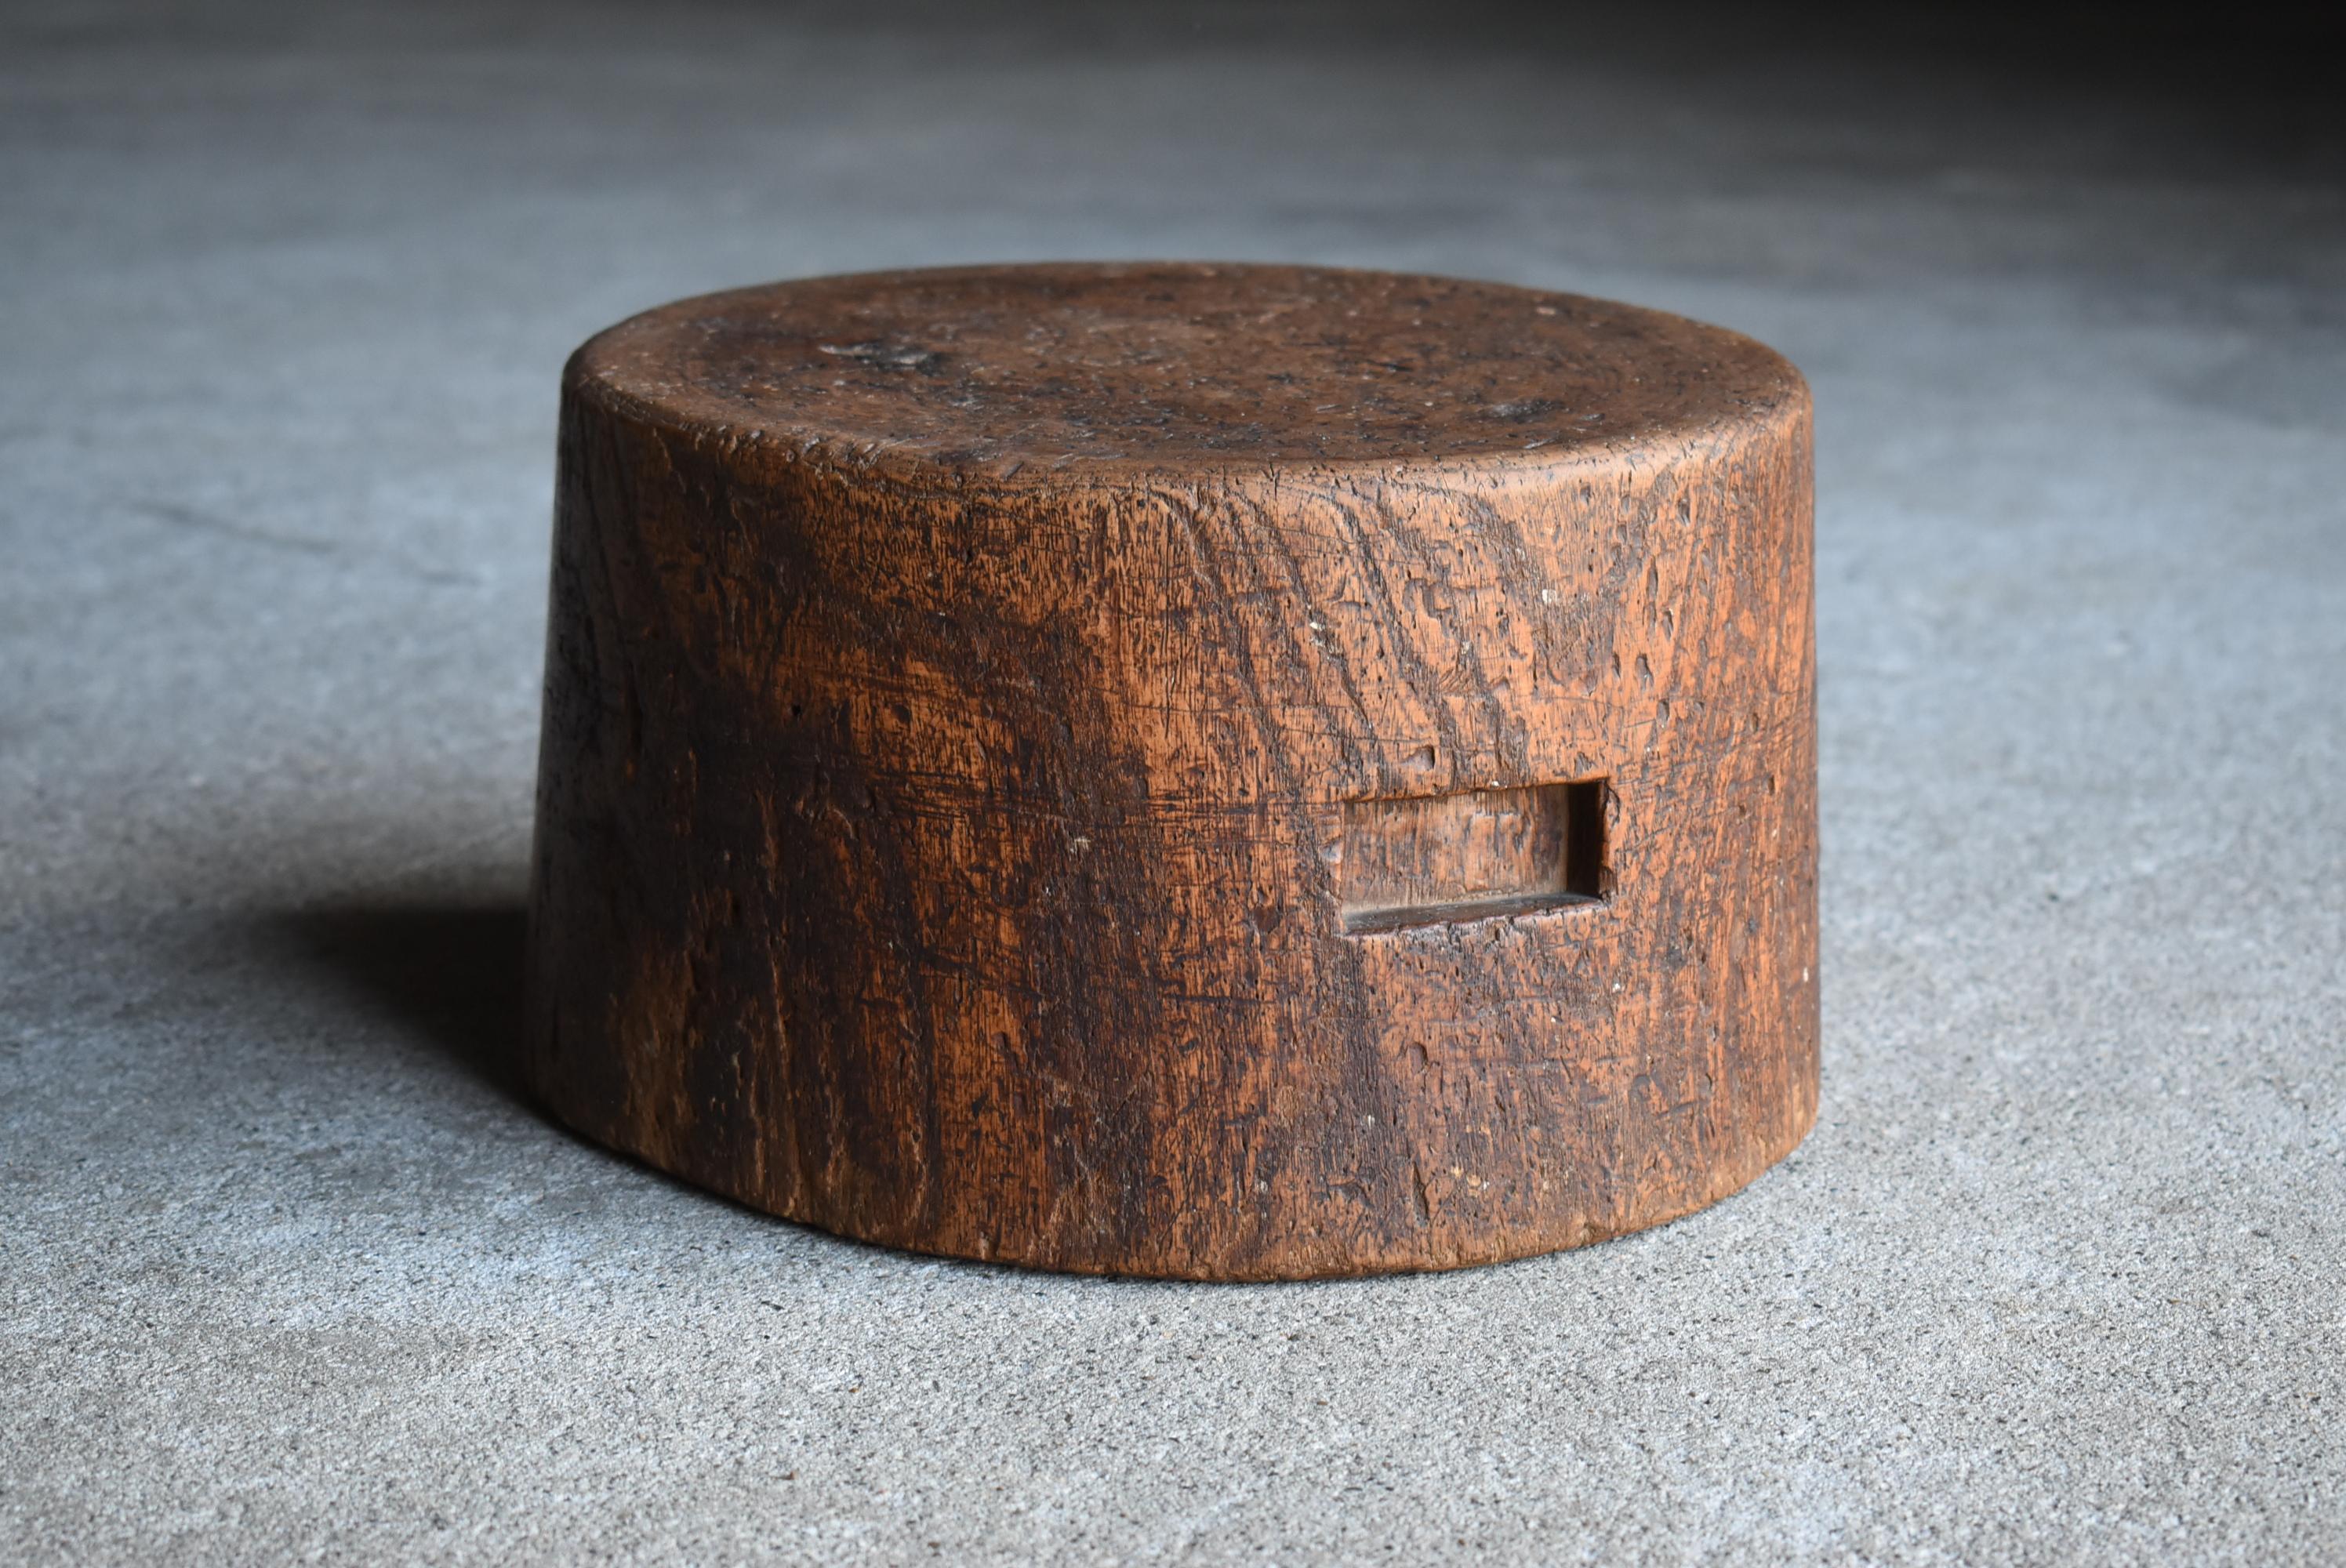 Japanese Antique Wooden Block Stool 1860s-1900s / Wabi Sabi Wood Chair Primitive 3